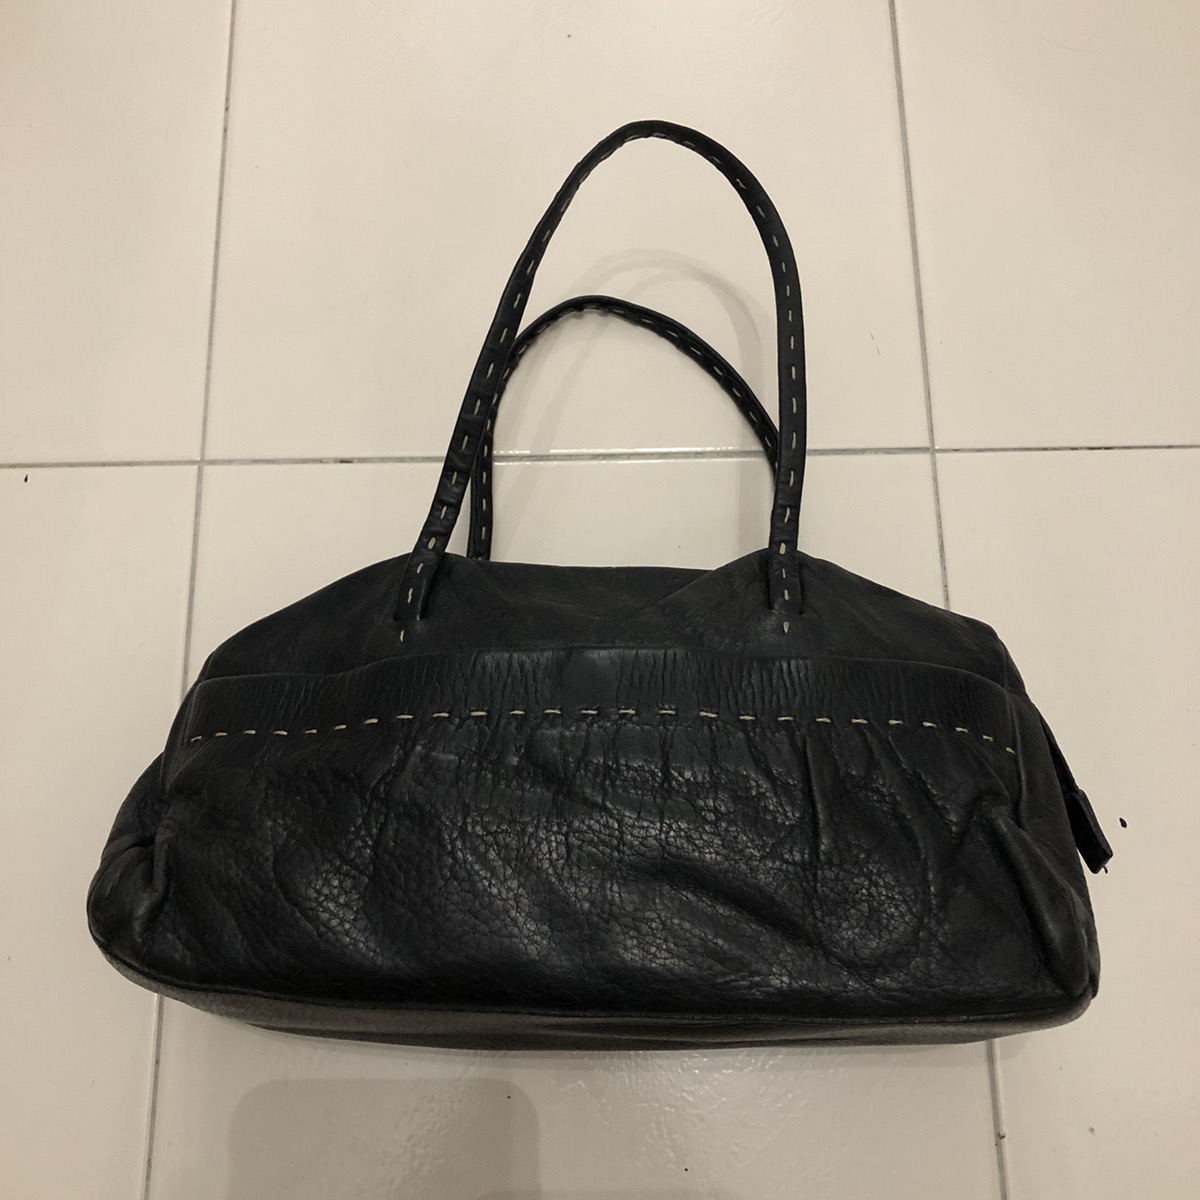 Miu miu leather hobo bag - 2